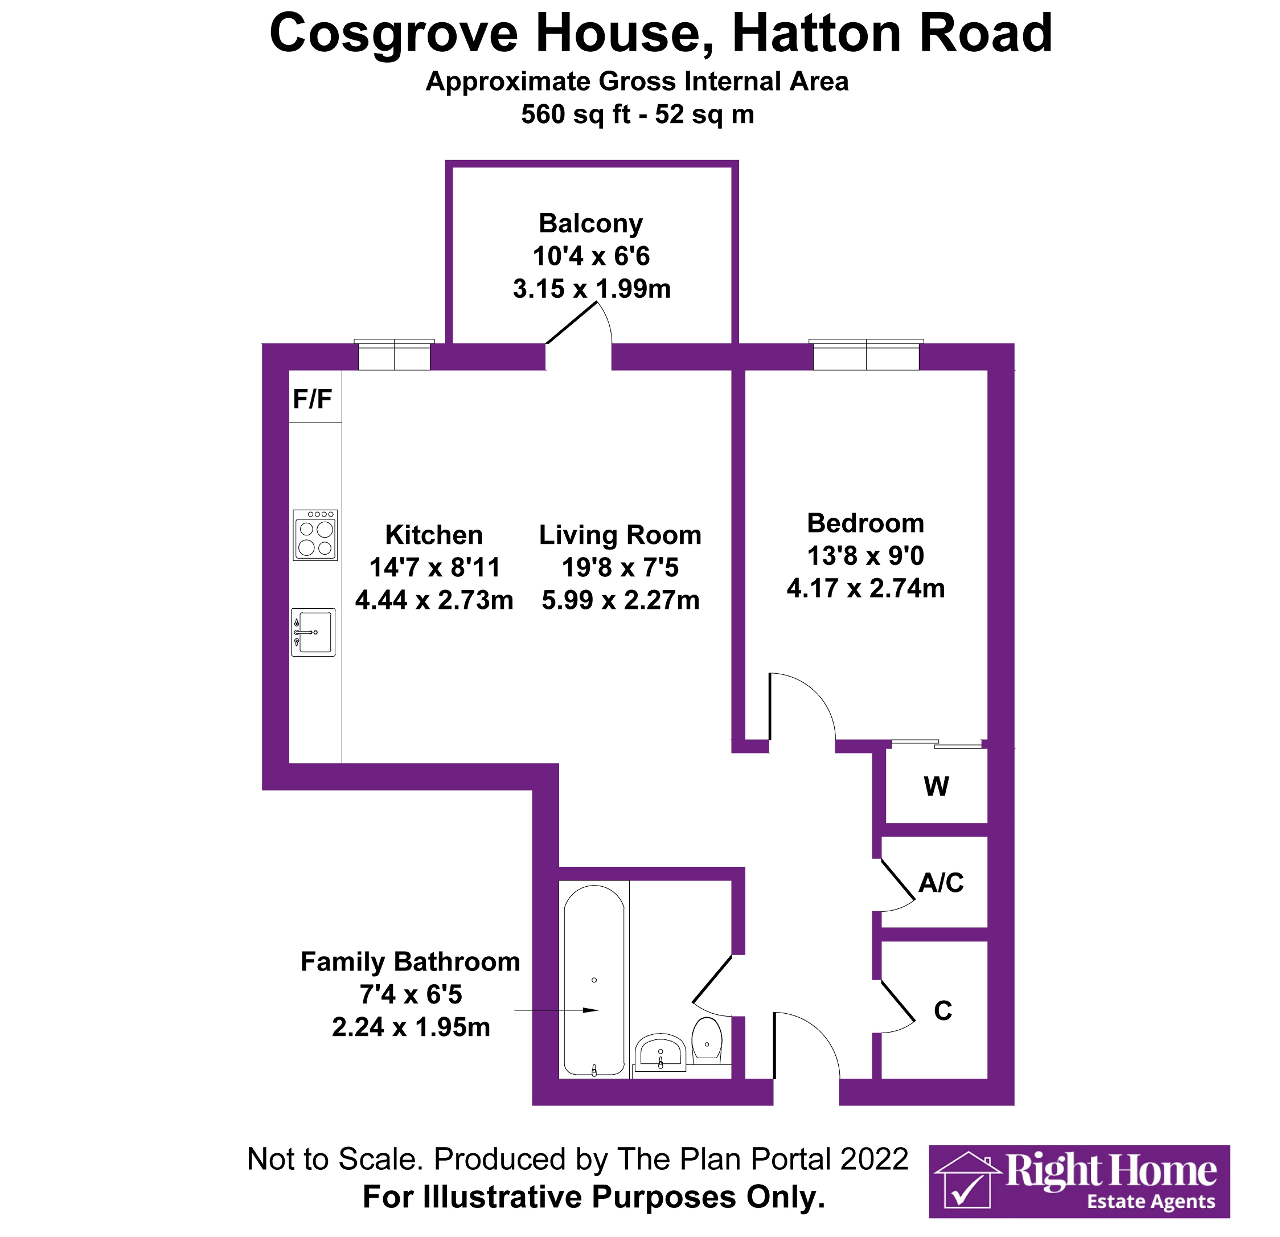 Floorplan of COSGROVE HOUSE, HATTON ROAD, WEMBLEY, MIDDLESEX, HA0 1RQ